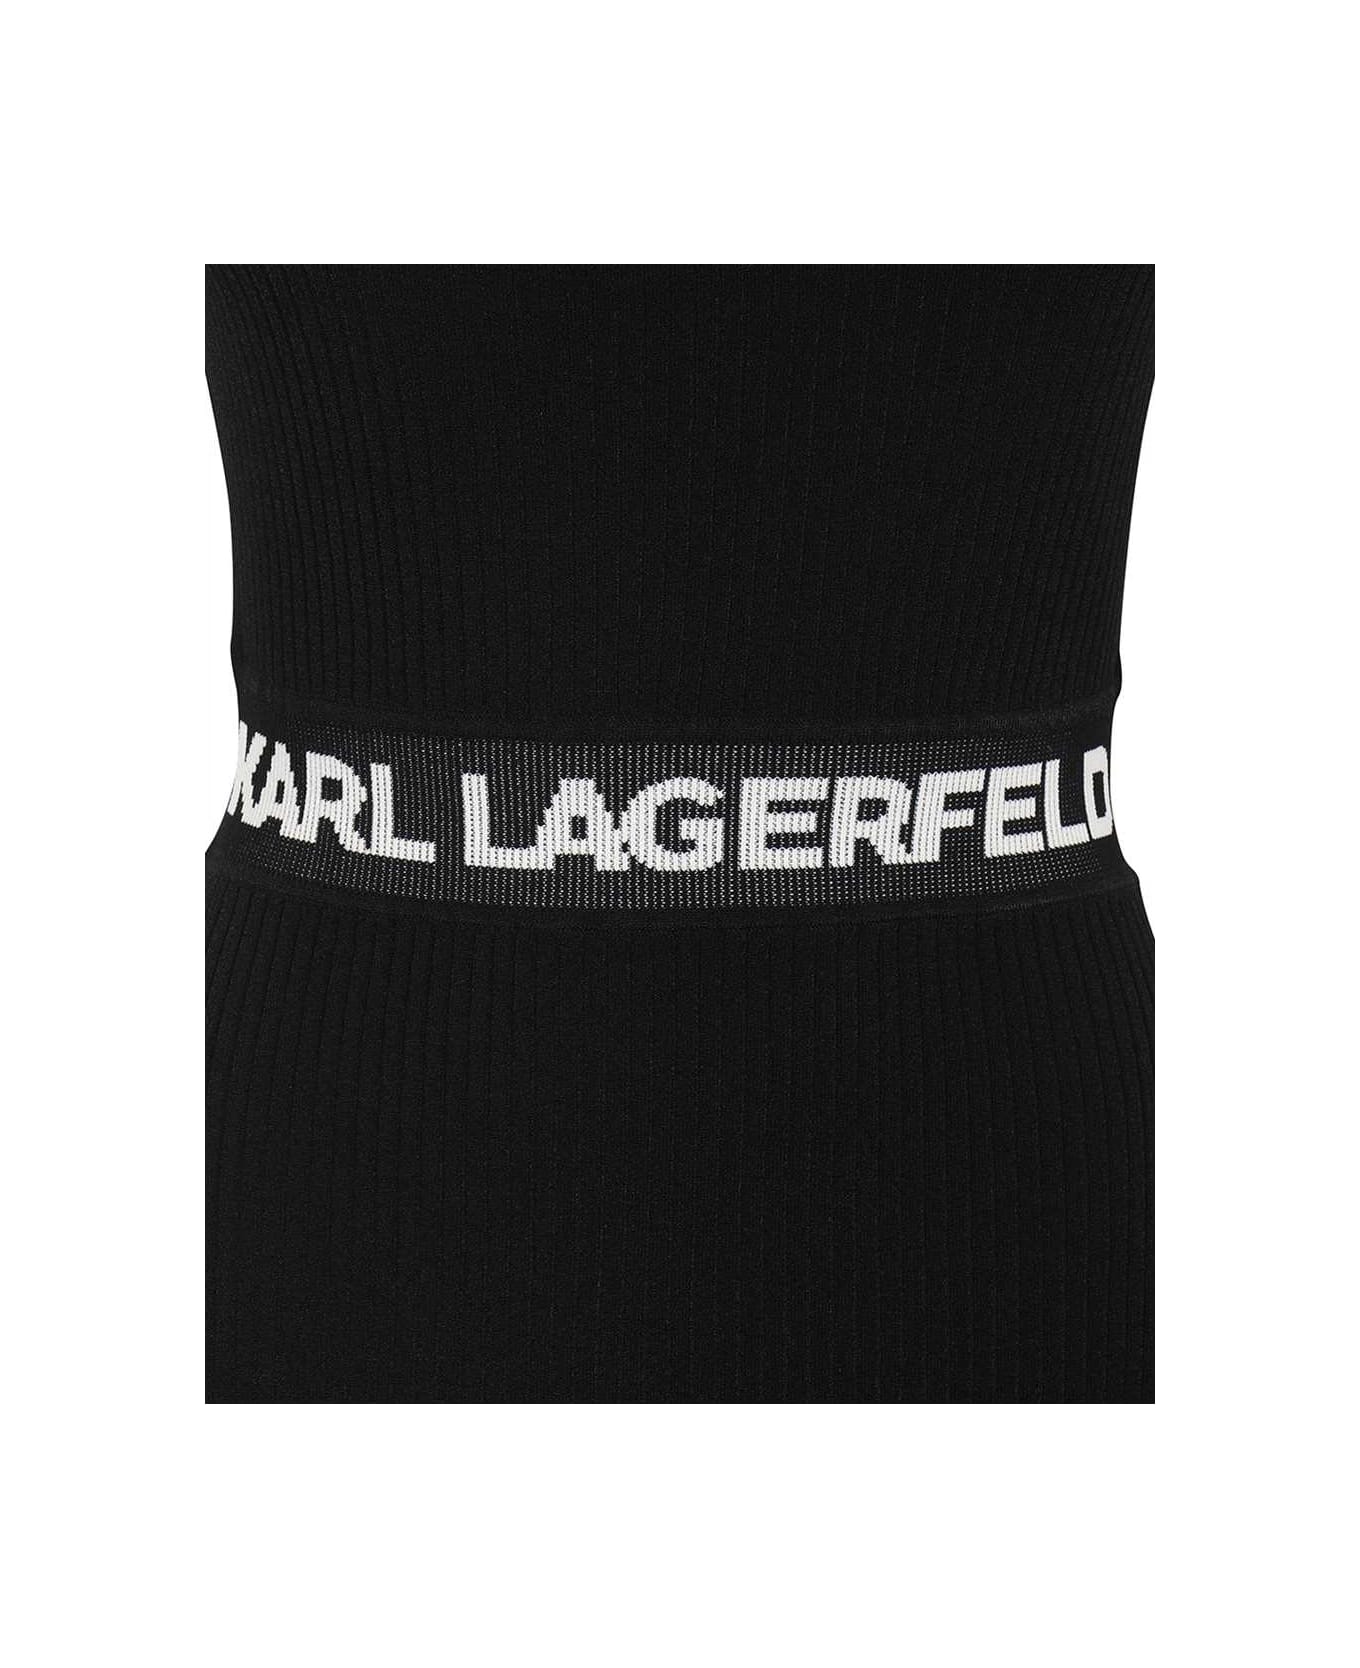 Karl Lagerfeld Knitted Dress - black